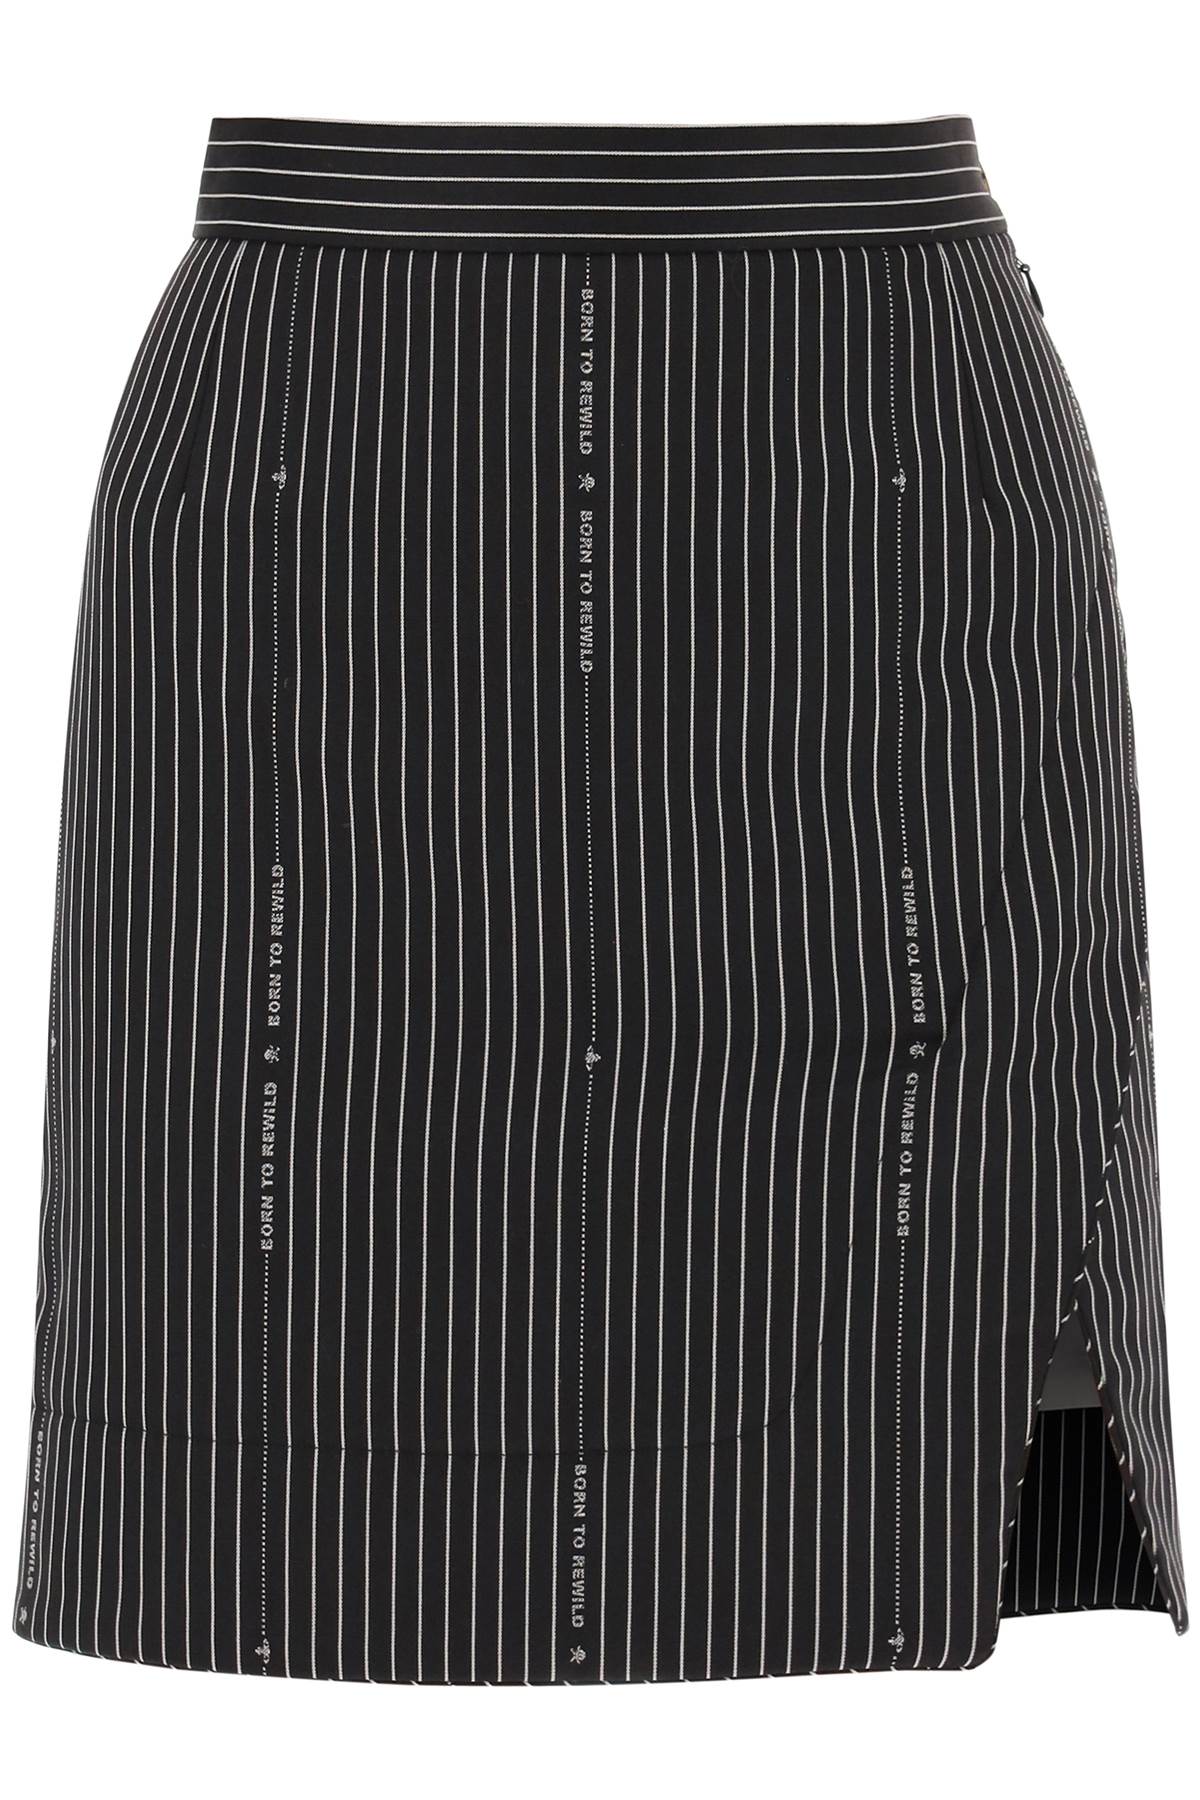 Vivienne westwood 'rita' wrap mini skirt with pinstriped motif 1K01000JW00FUSI BLACK